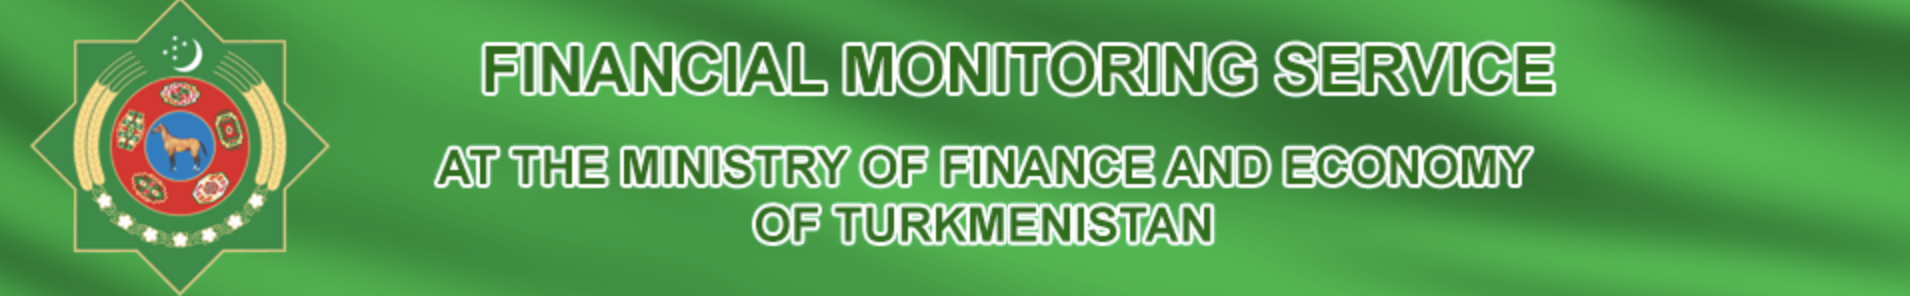 Ministerie van Financiën turkmenistan logo